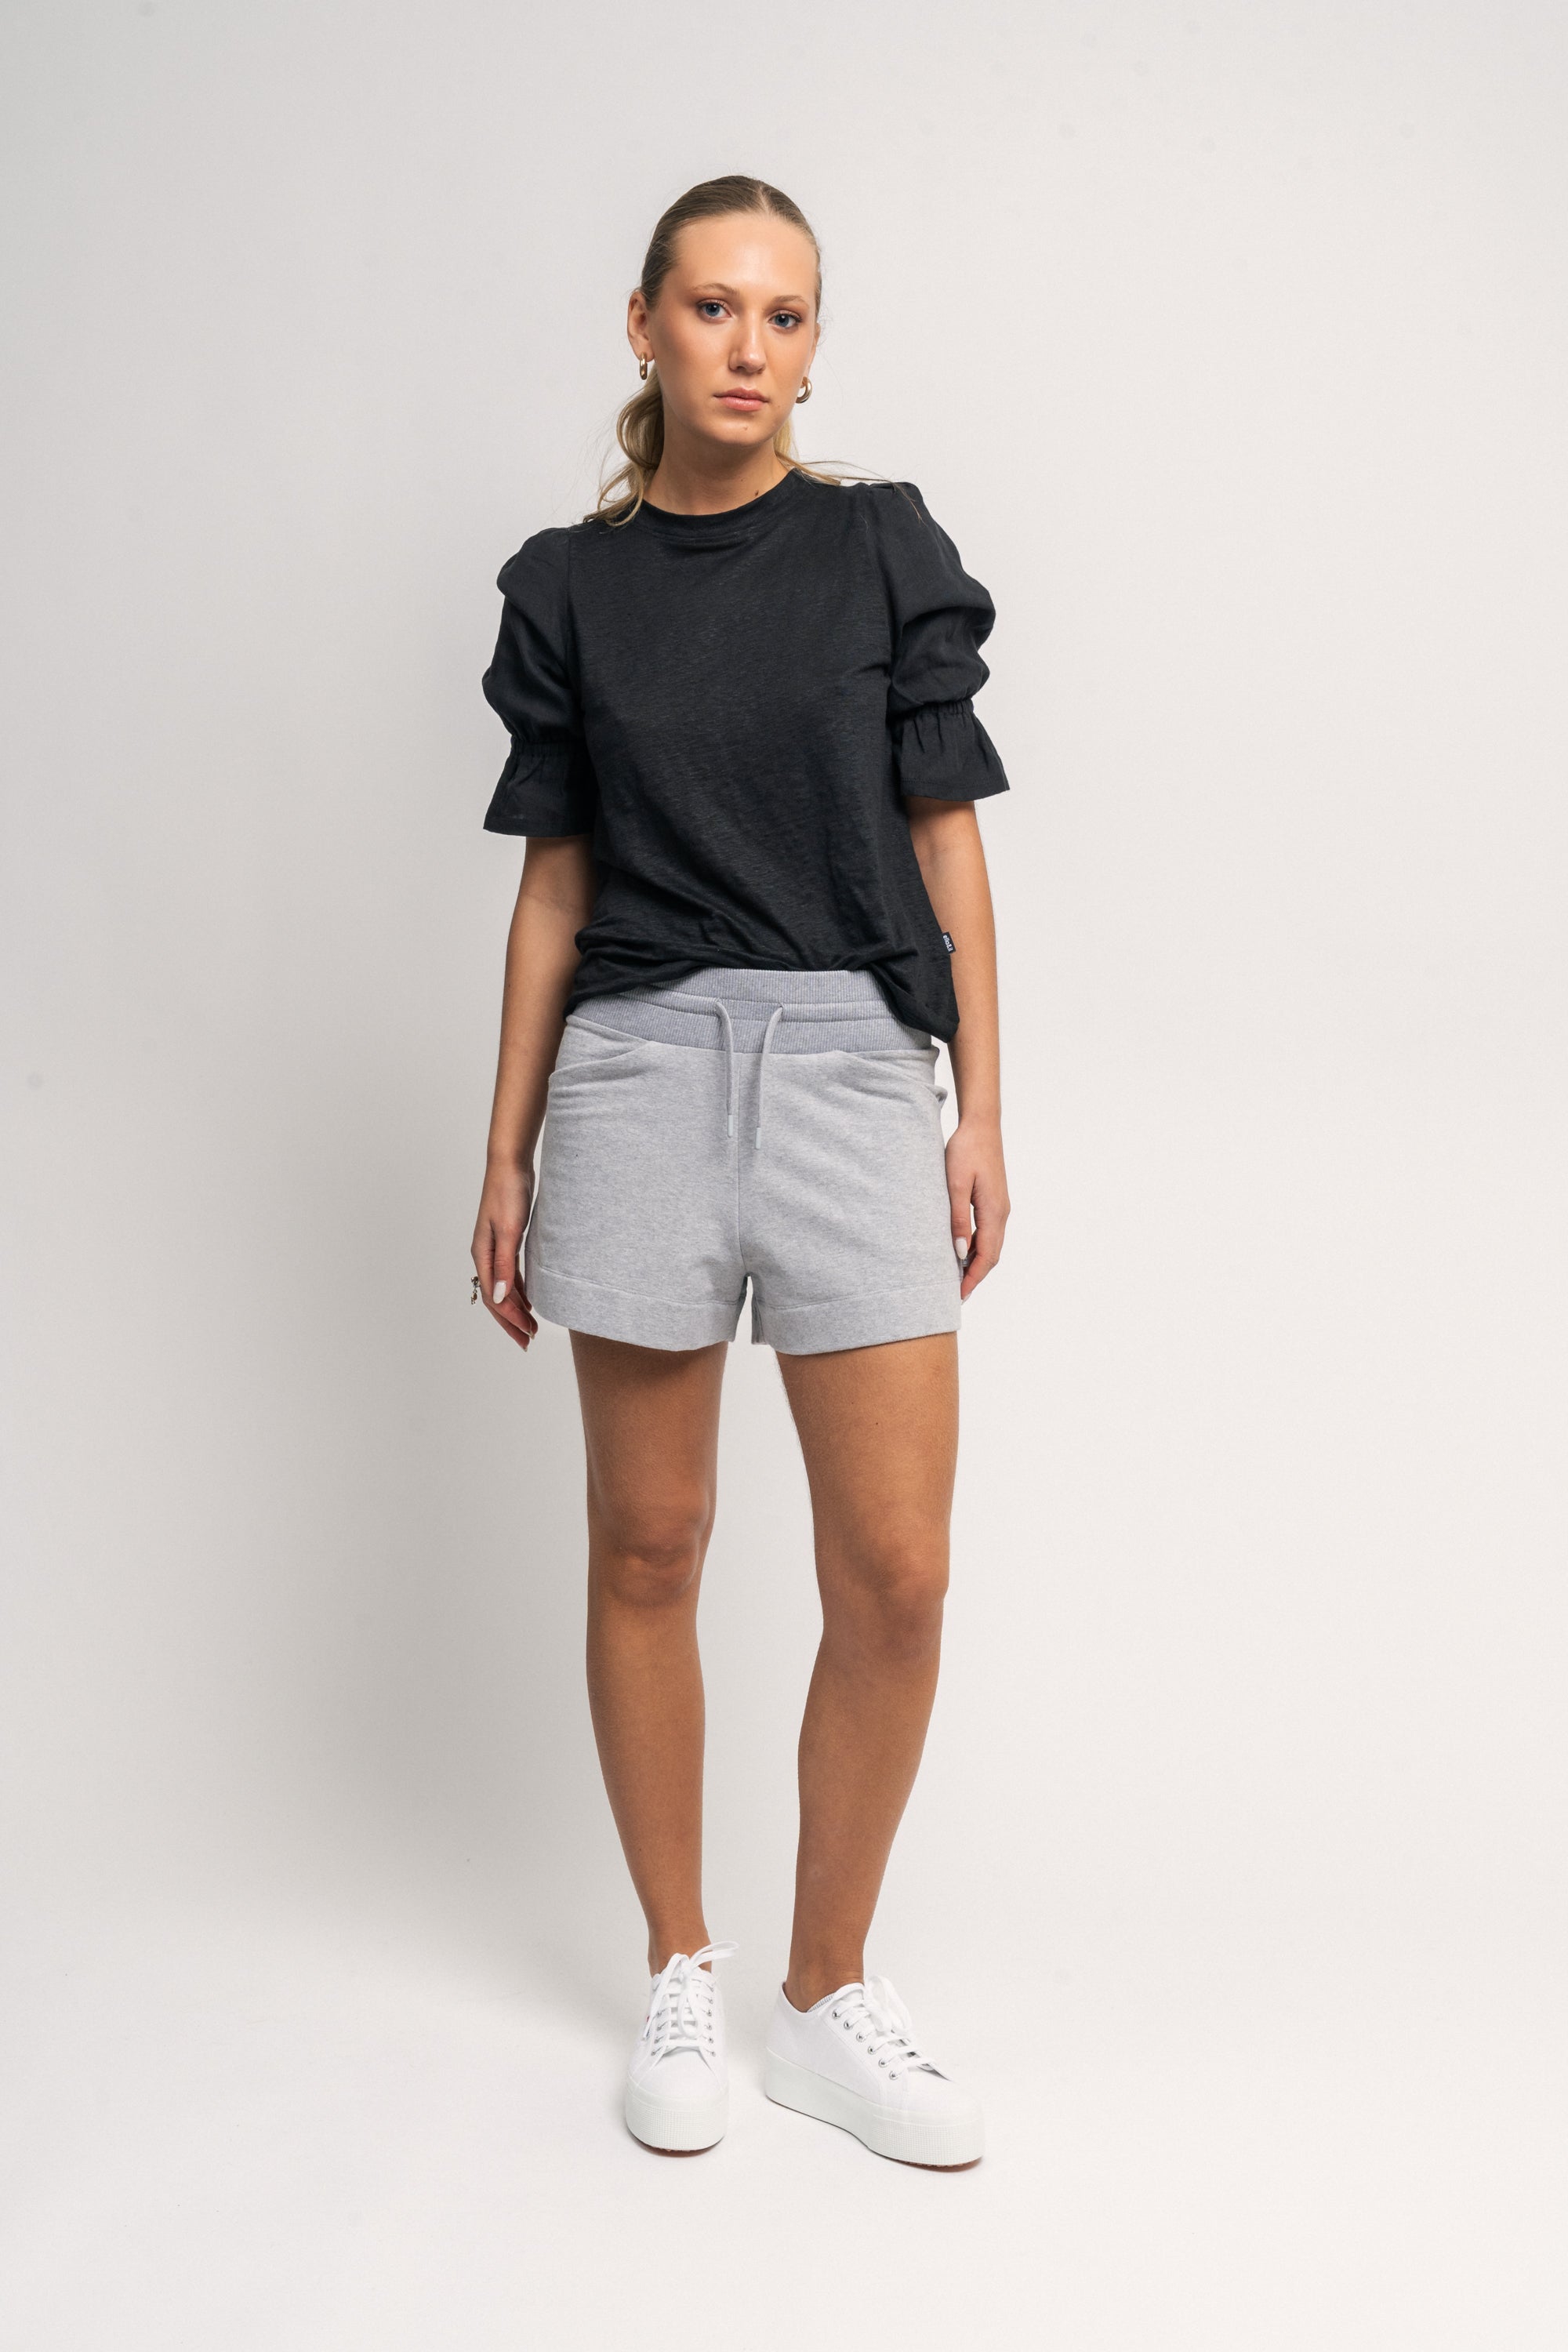 Kylie Shorts - Grey